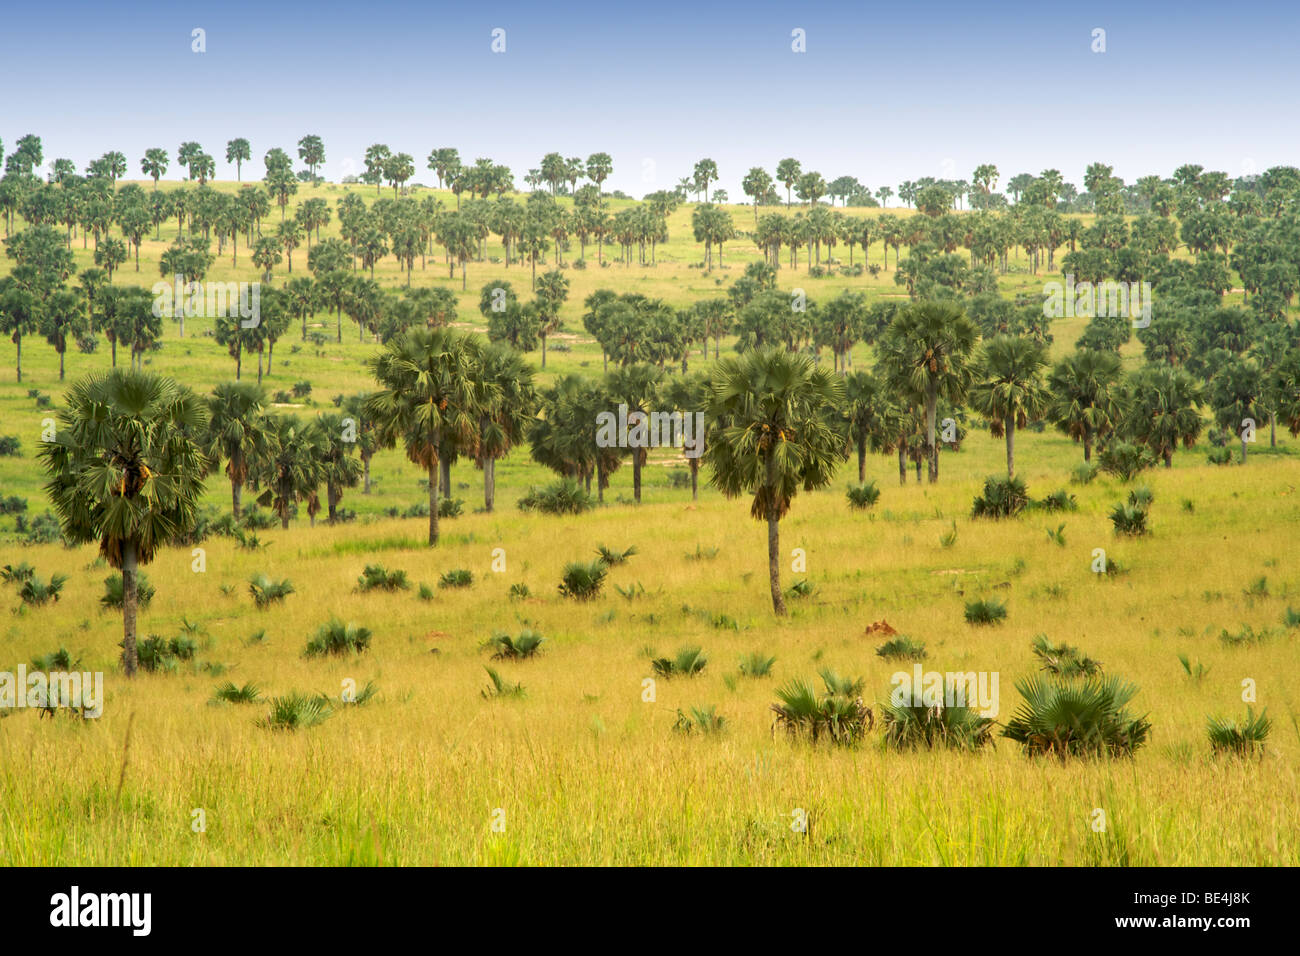 Borassus palm forest in Murchison Falls National Park in Uganda. Stock Photo